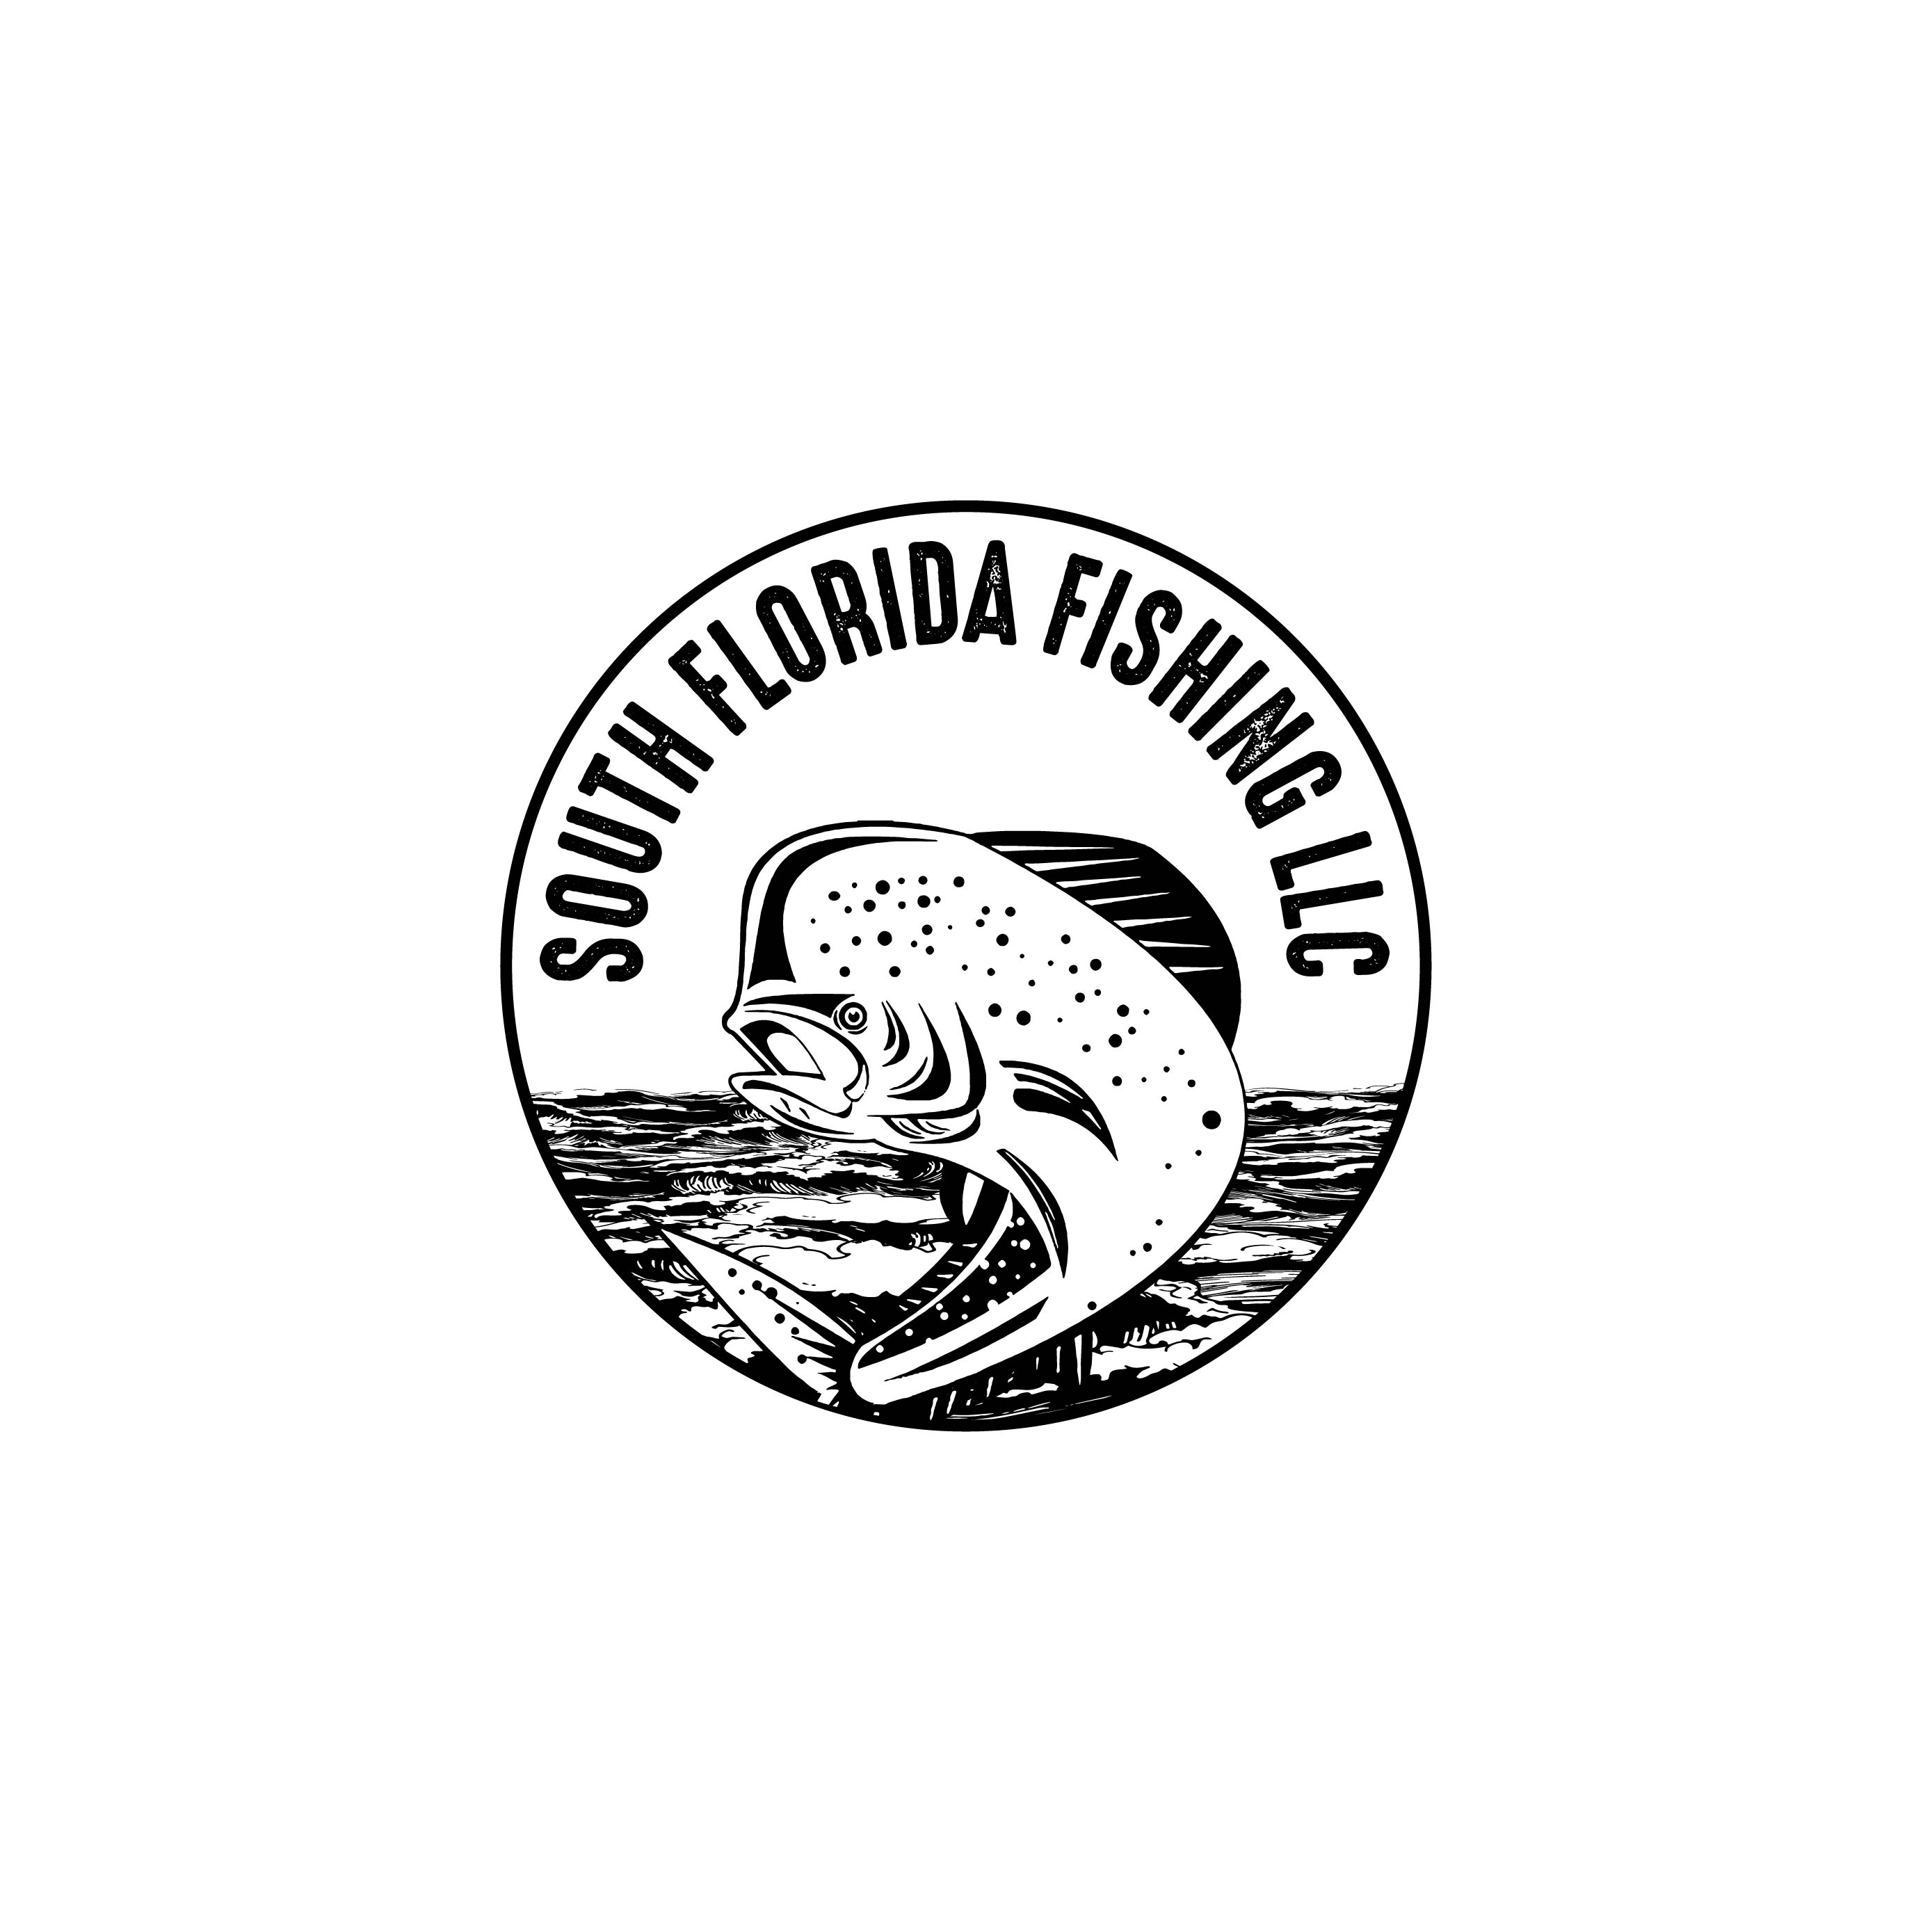 South Florida fishing LLC-02